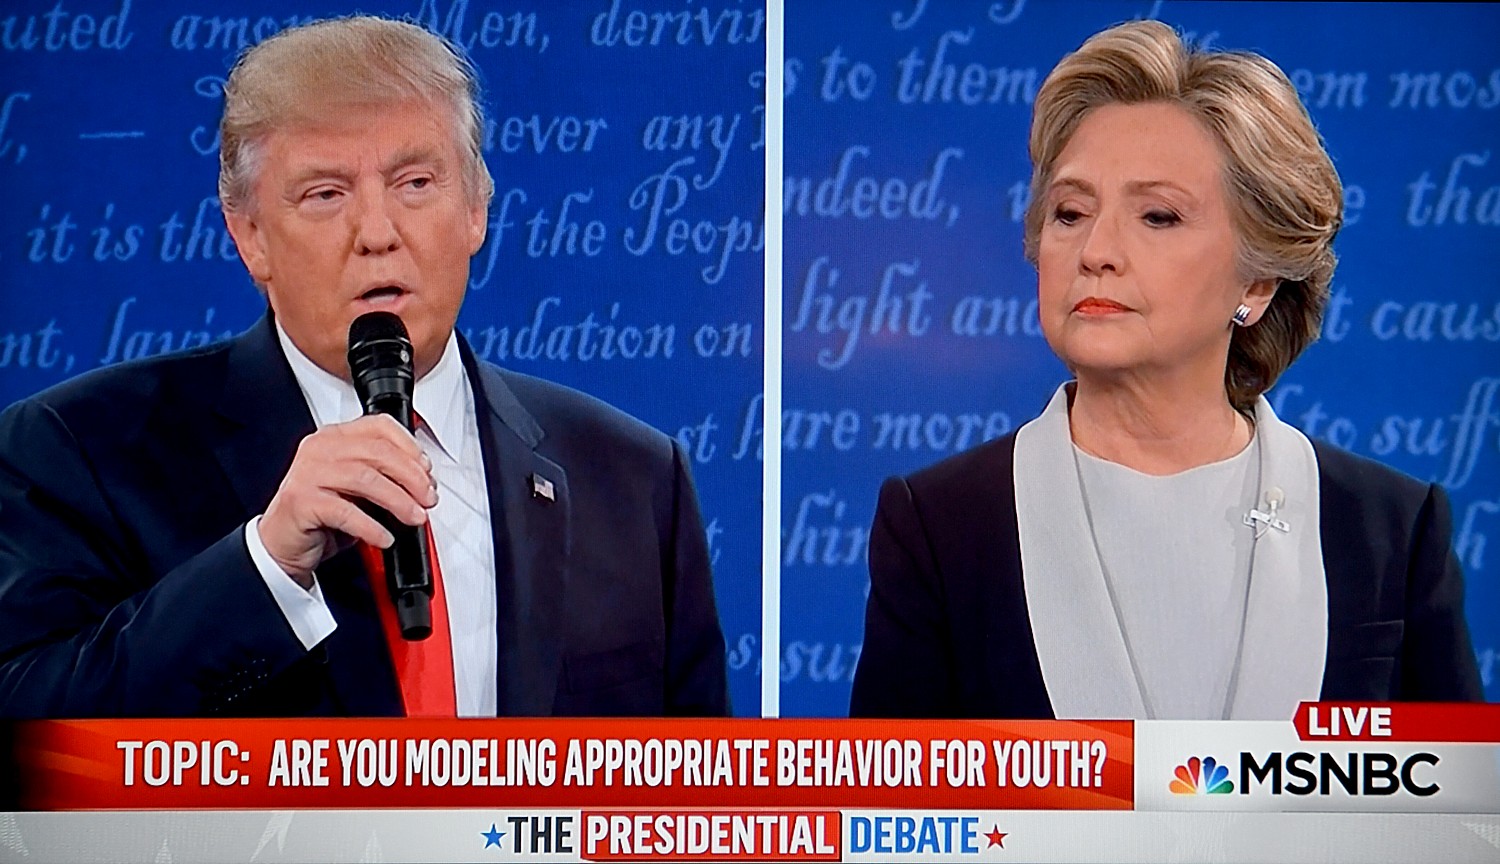  Republican Donald Trump and Democrat Hillary Clinton clash in the second presidential debate © 2016 Karen Rubin/news-photos-features.com